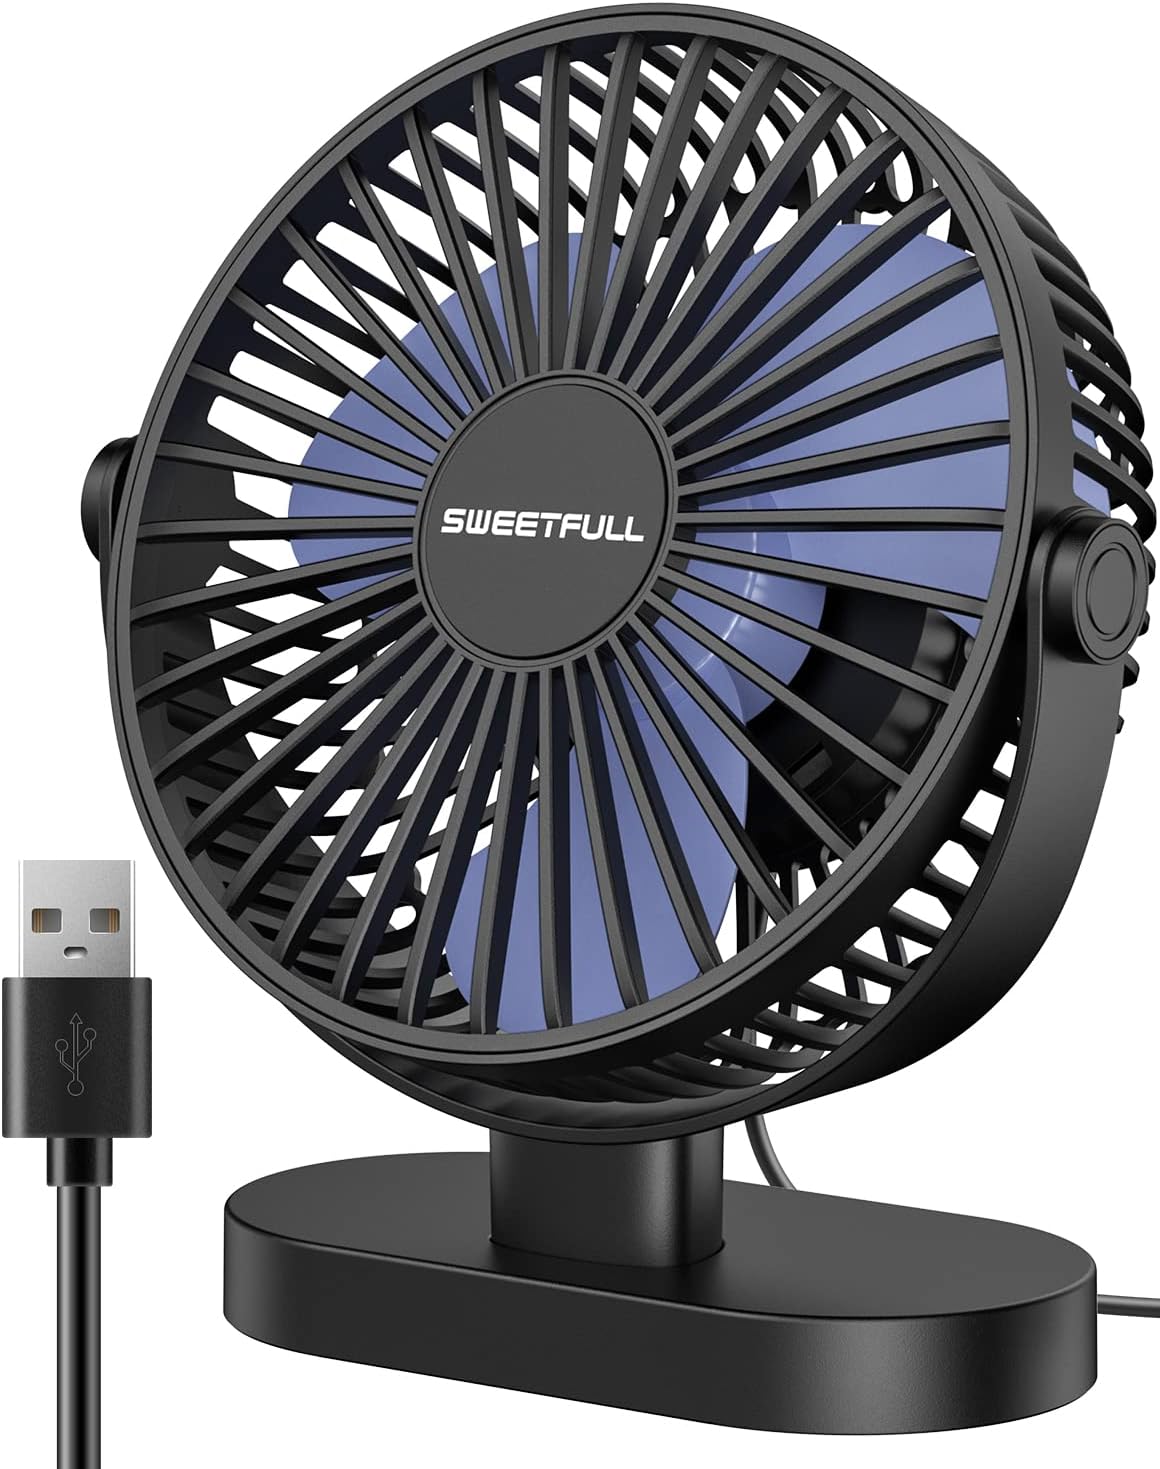 SWEETFULL USB Desk Fan Small Quiet - 3 Speeds Mini Personal Portable Fan 360 Rotation Adjustable, 6 Inch Office Table Cooling Gadgets on Desktop (Black Blue)